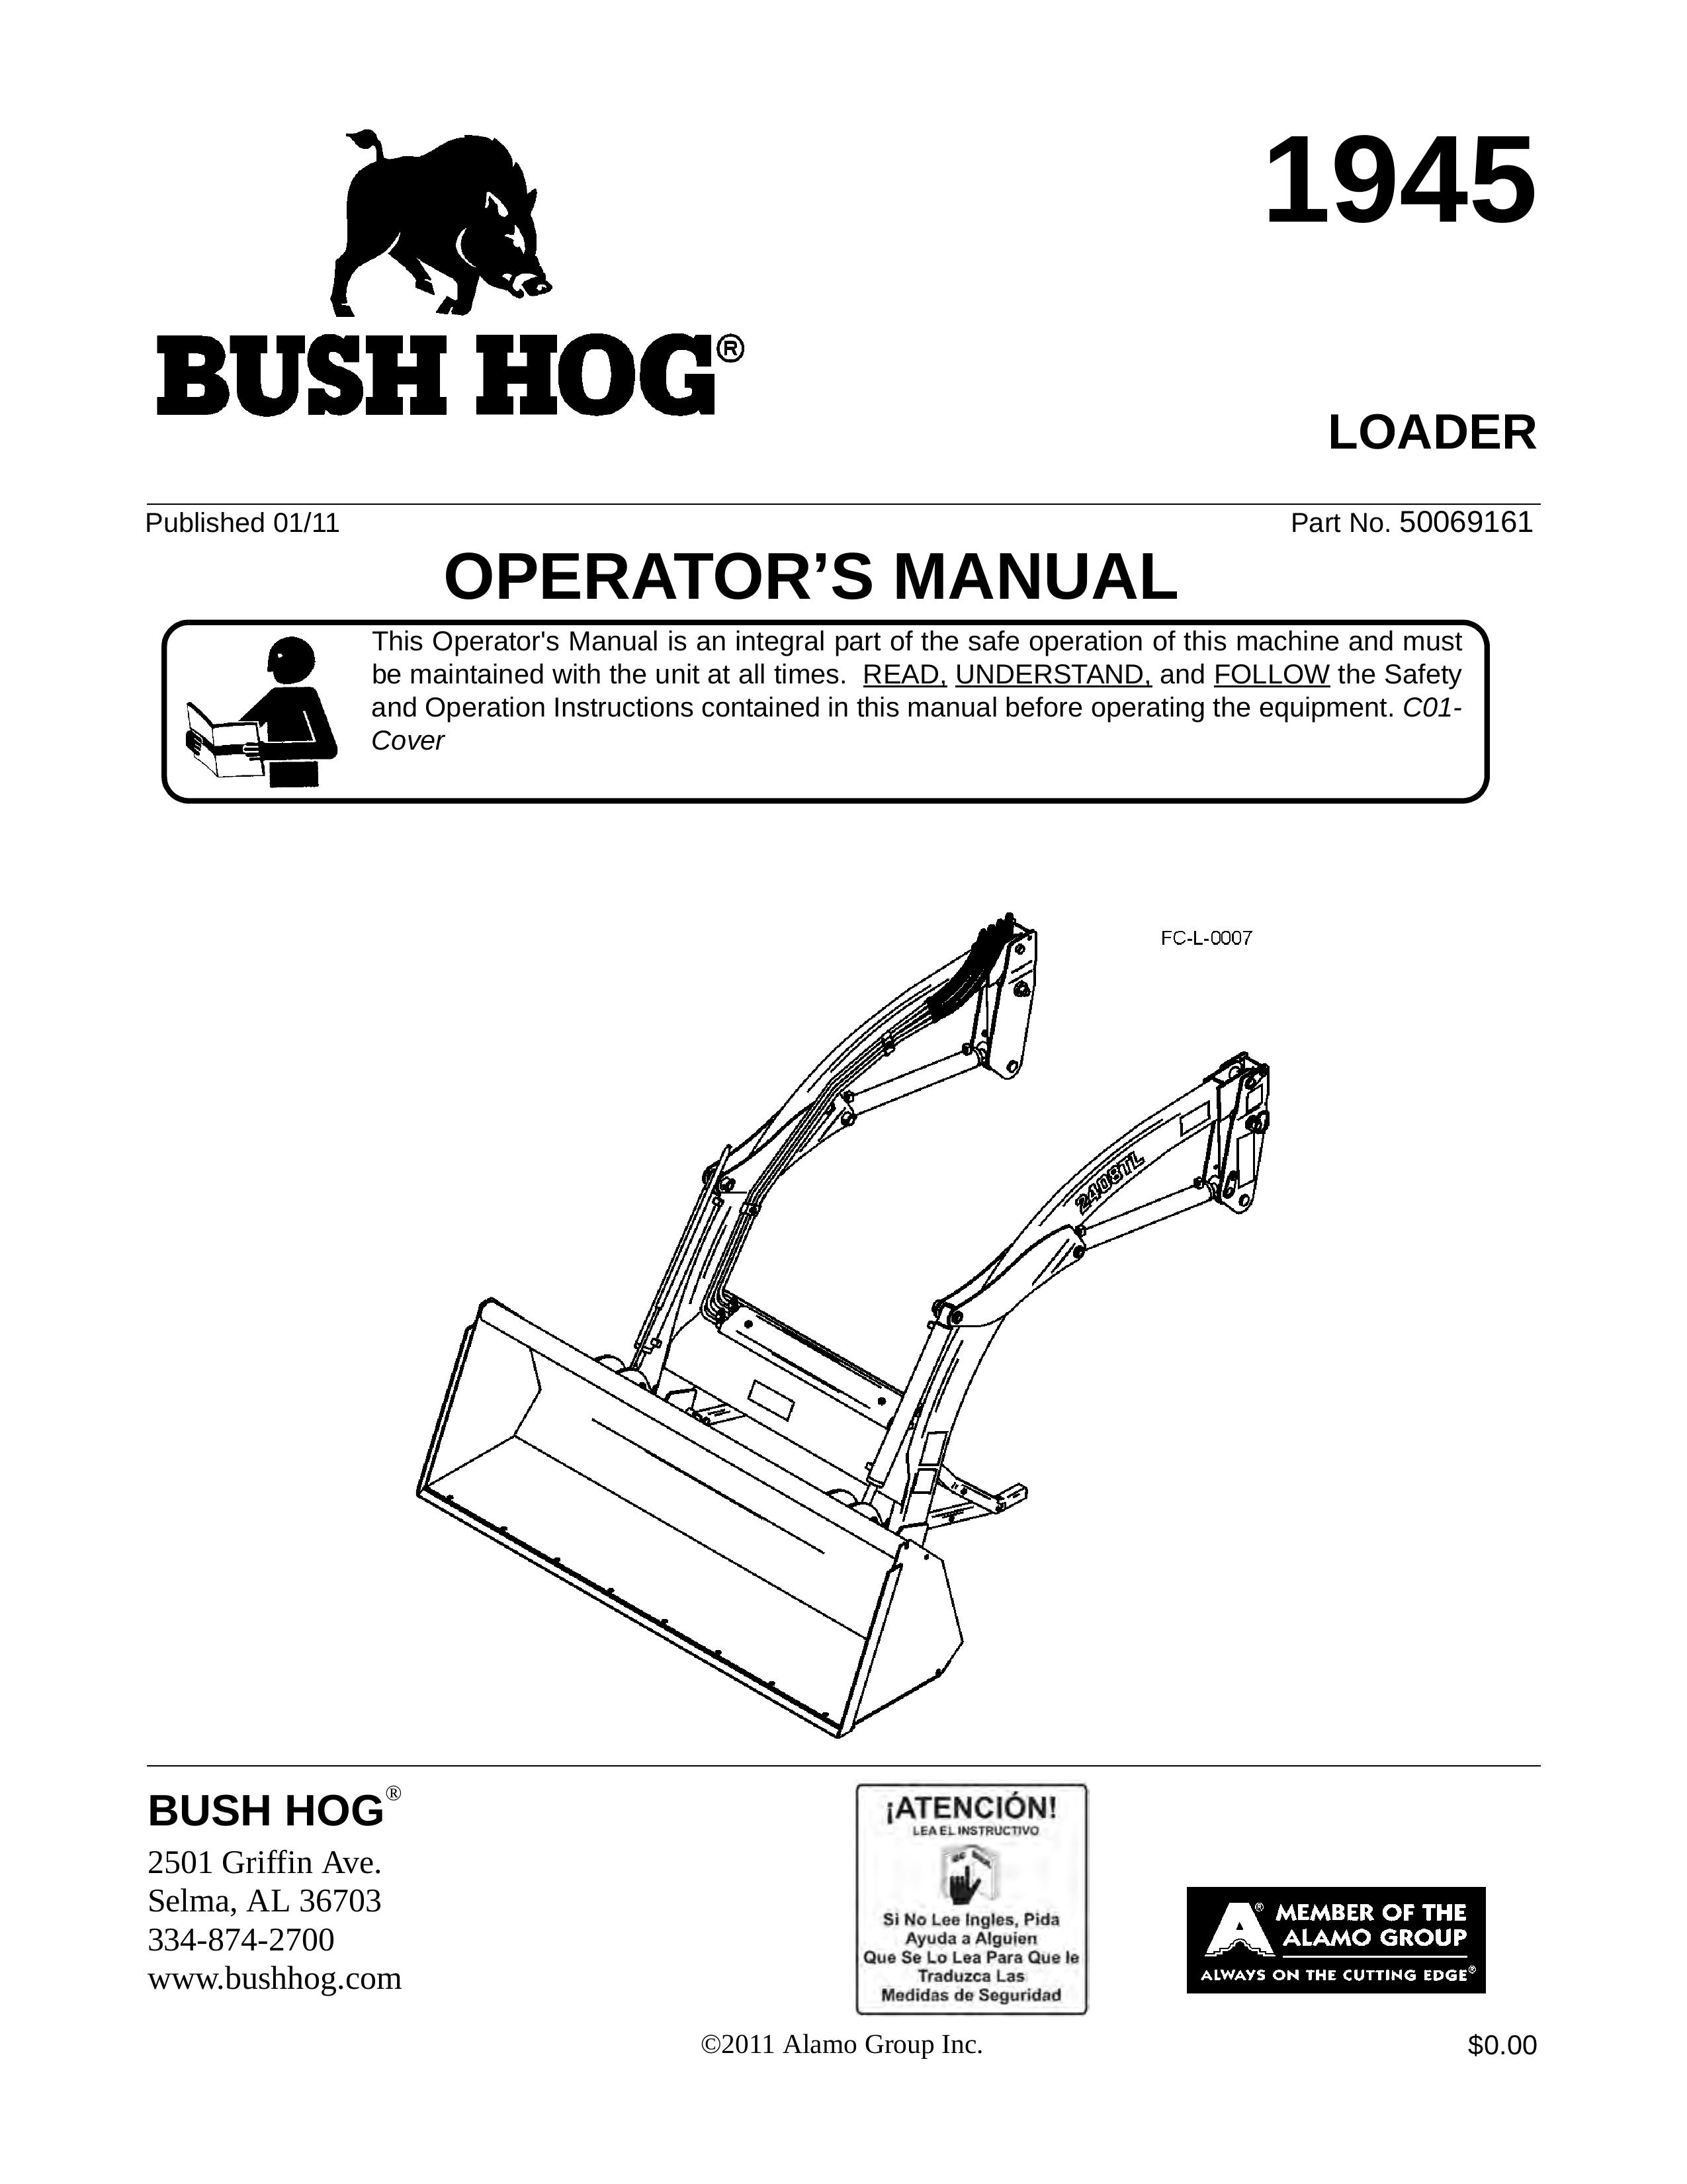 Bush Hog 1945 Compact Loader User Manual